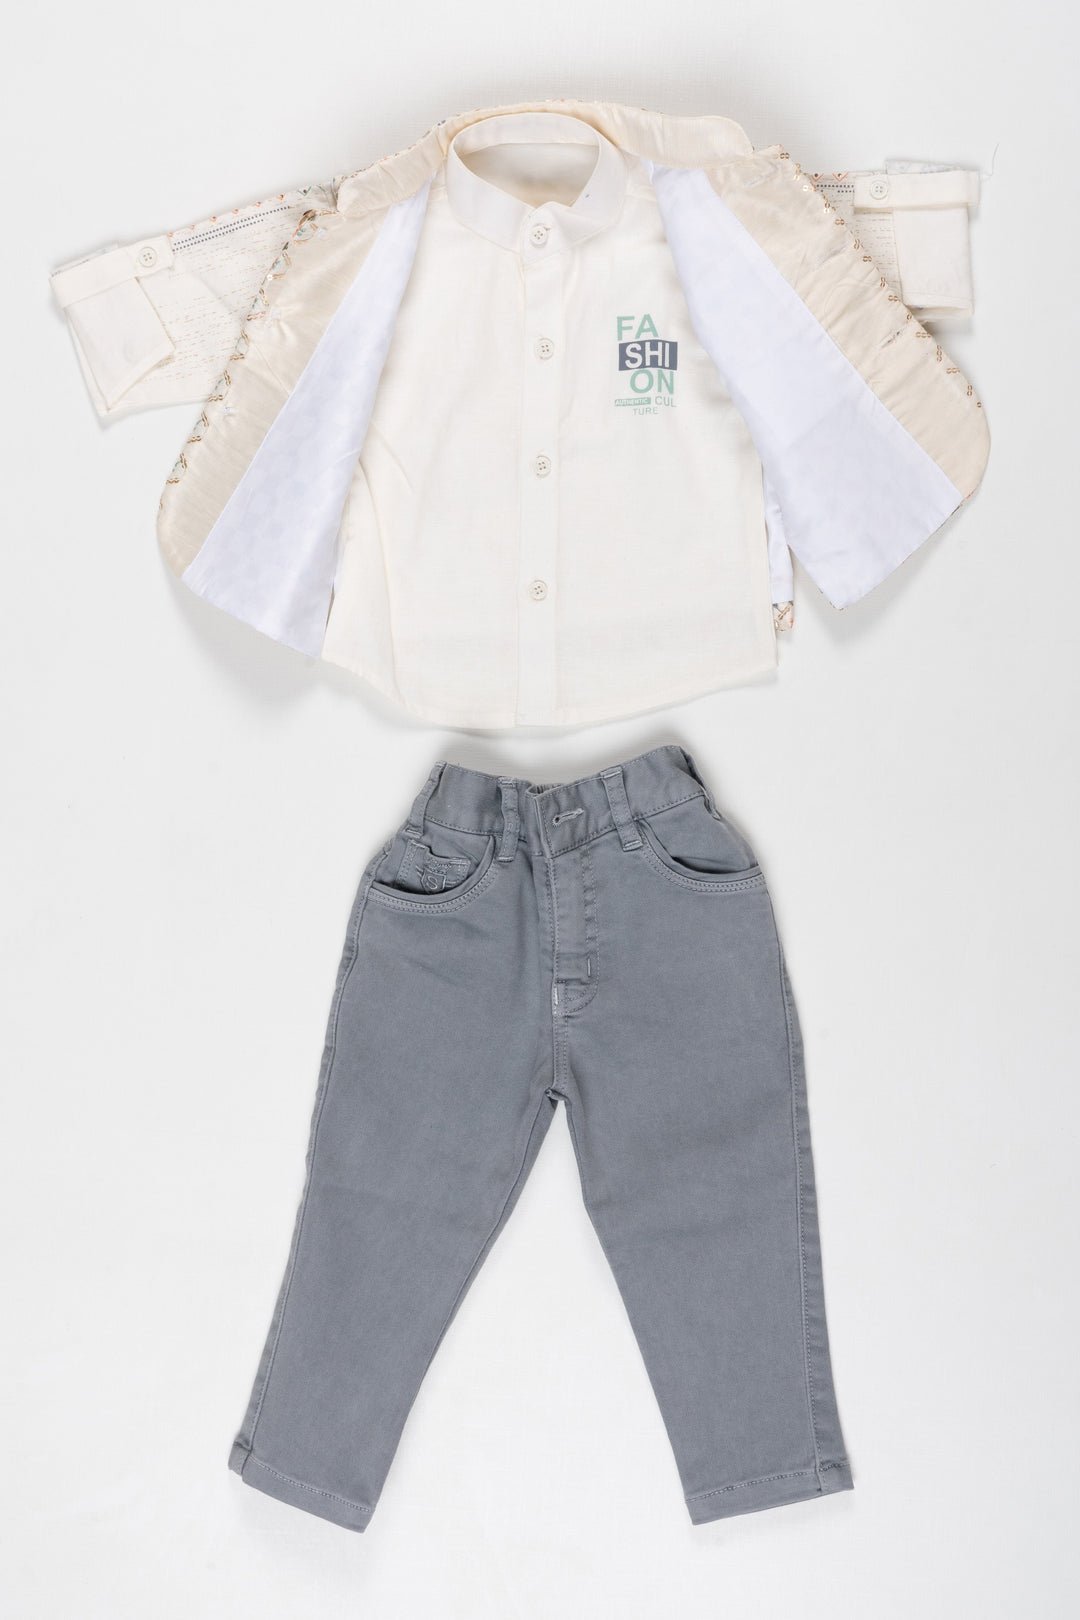 The Nesavu Boys Jacket Sets Elegant Floral Vest and Grey Trousers Ensemble for Children Nesavu 16 (1Y) / Half white / Blend Silk BES534A-16 Children’s Stylish Floral Vest Outfit Set | Grey Trousers  White Shirt | The Nesavu